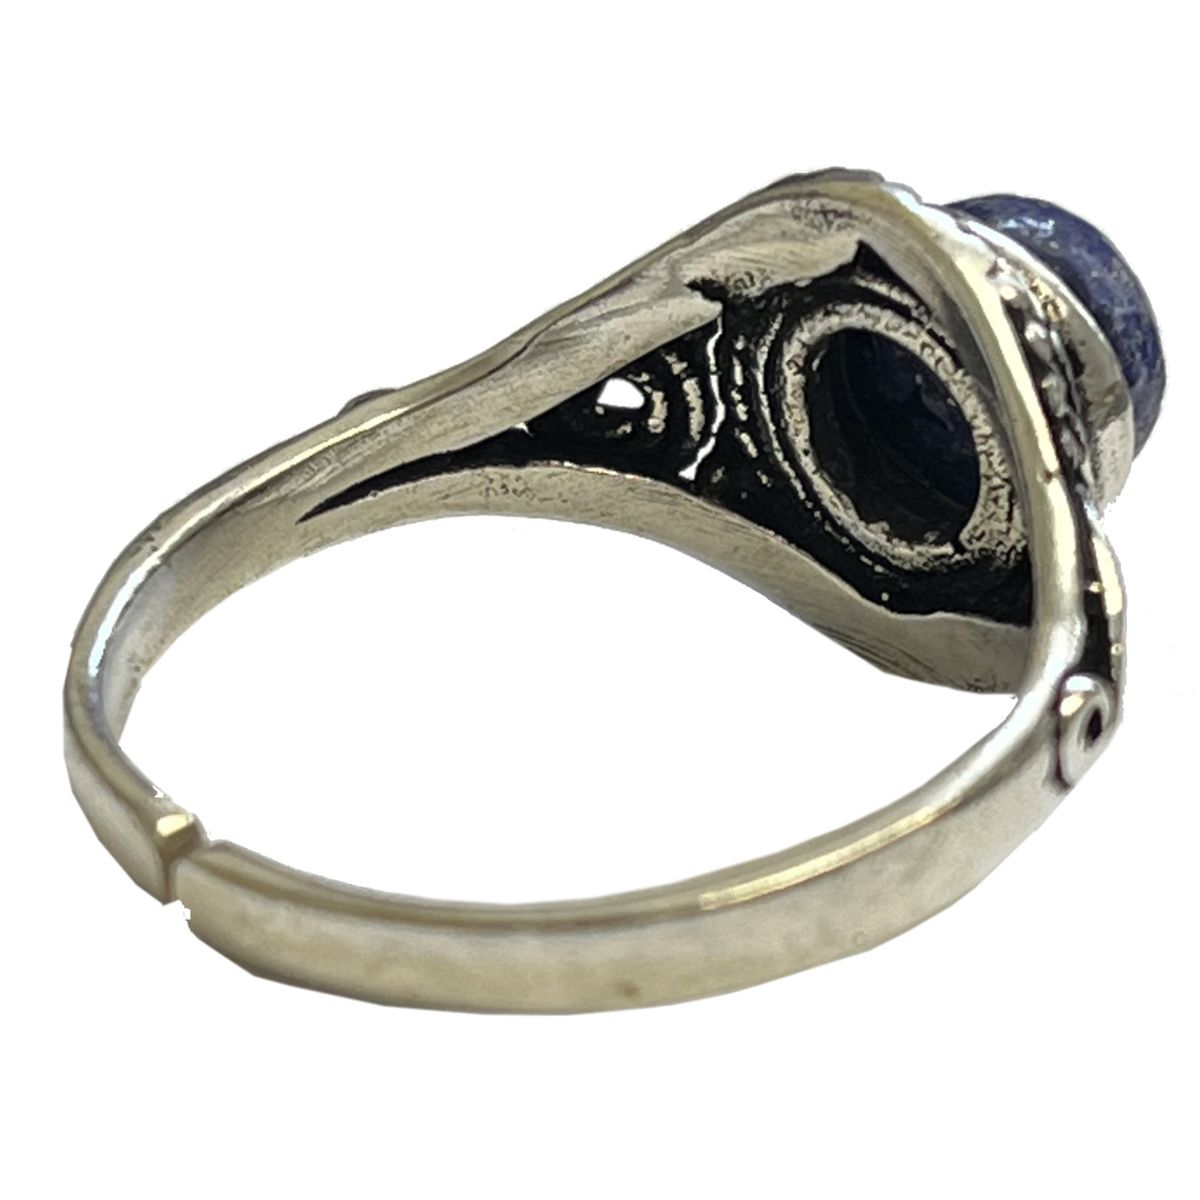 Brass and Lapis lazuli adjustable ring